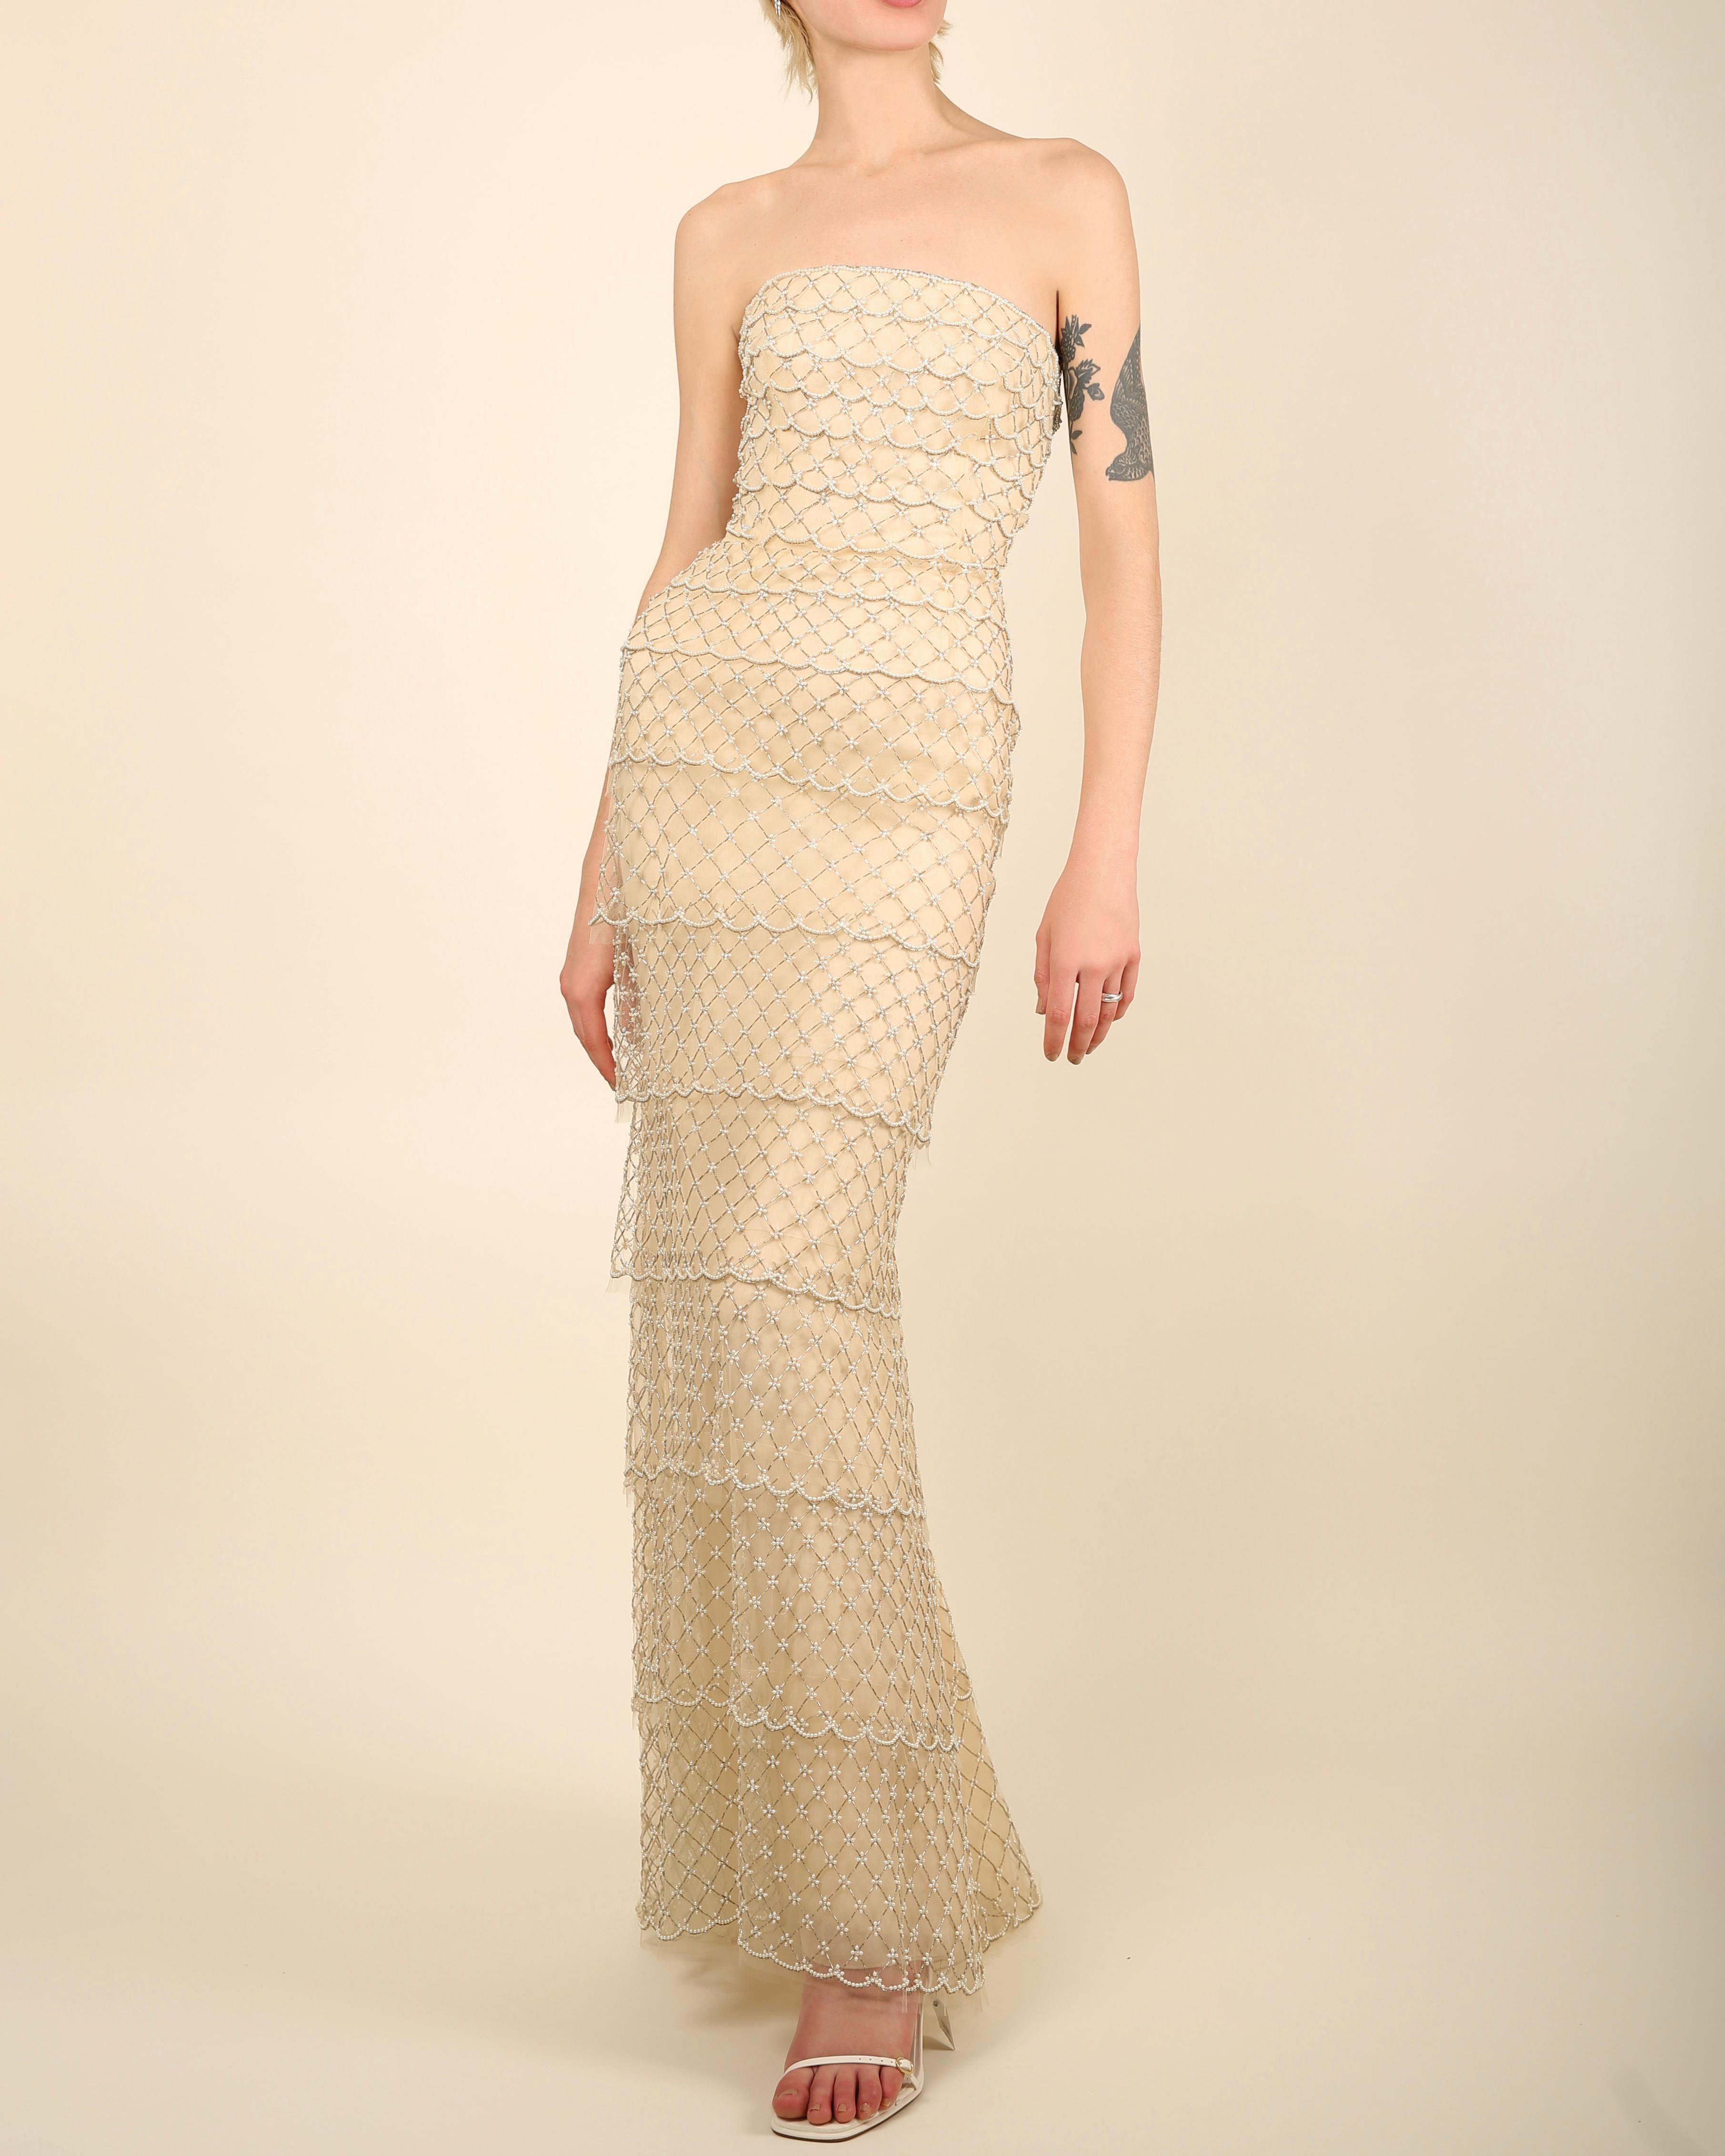 Oscar de la Renta S/S 2014 strapless tiered sheer mesh pearl wedding dress gown 1